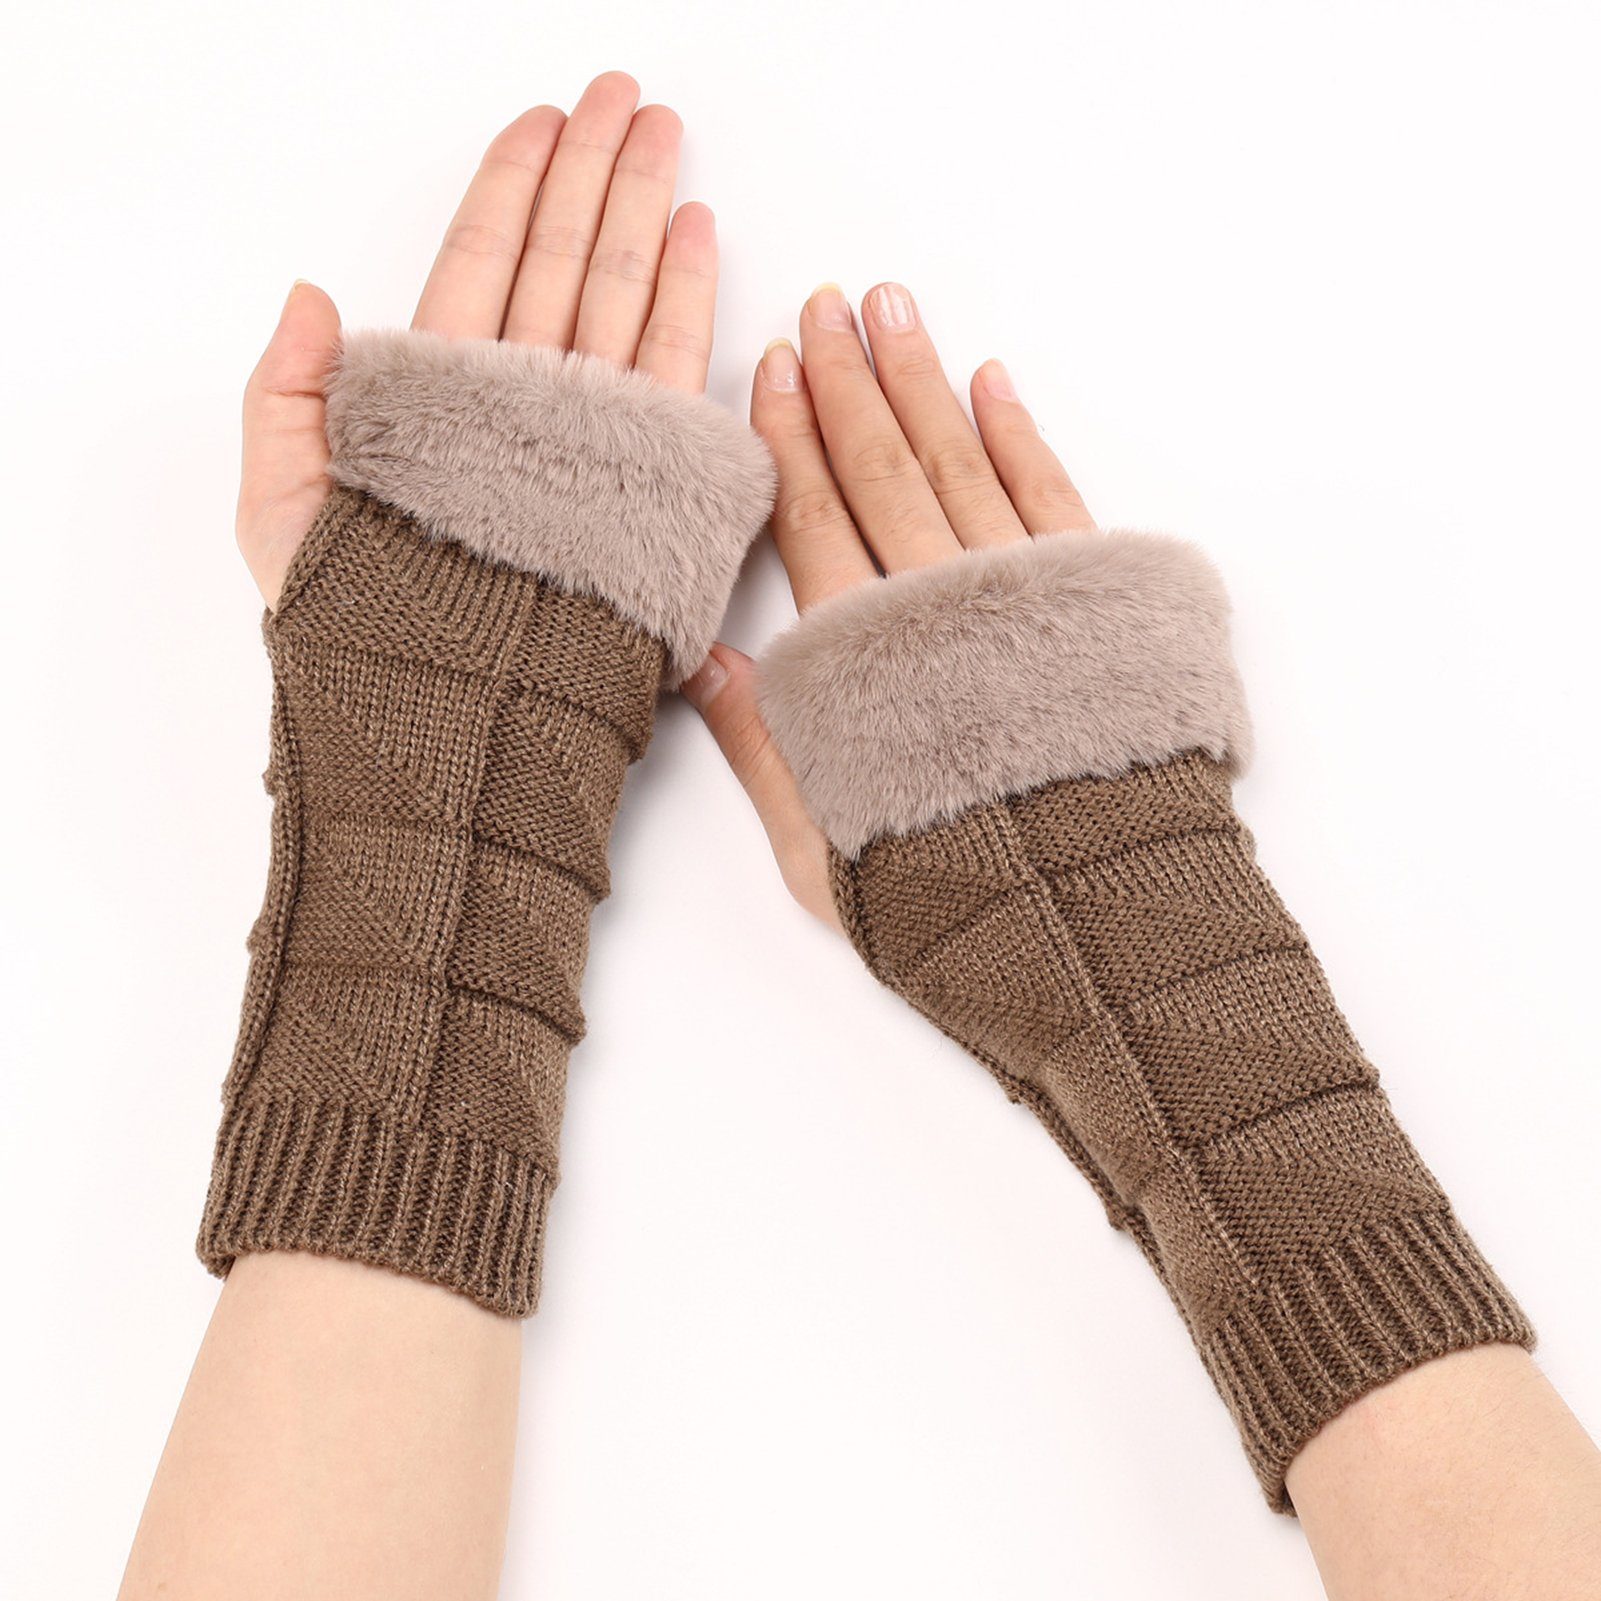 Rutaqian Strickhandschuhe 1 Paar Weicher Strick Handschuhe Ohne Finger, Handschuhe Für Mädchen Einfarbig, Gestrickt, Dreiecksmuster